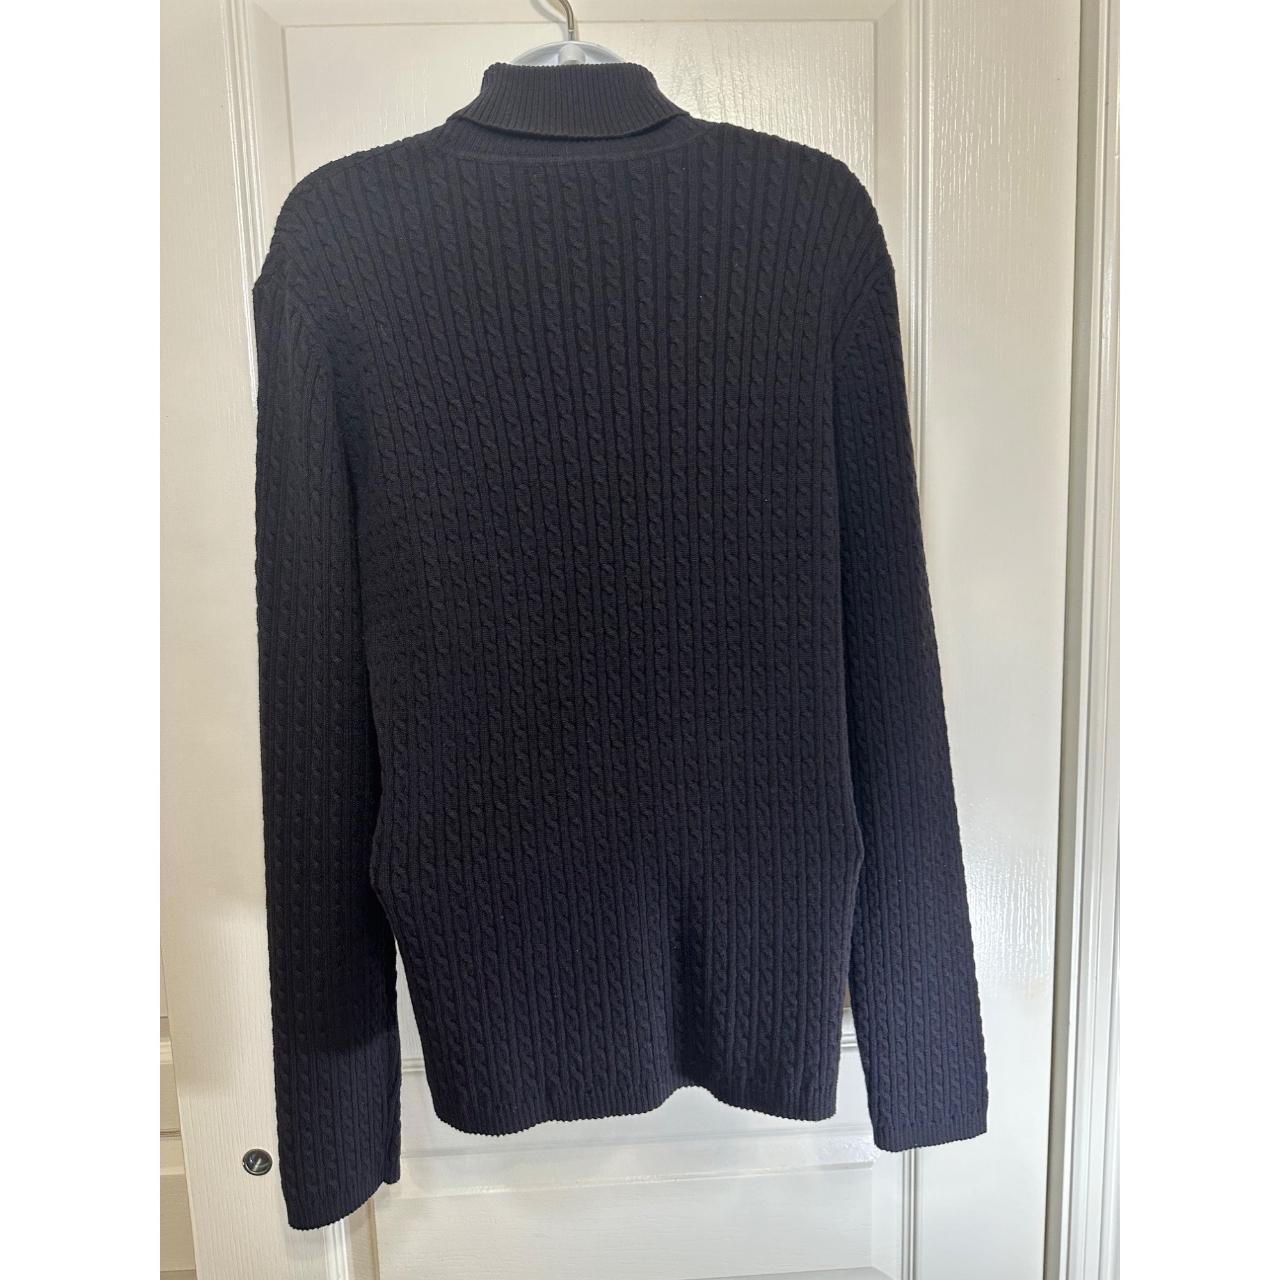 Anne Klein Cable Knit Turtleneck Sweater Black Long... - Depop